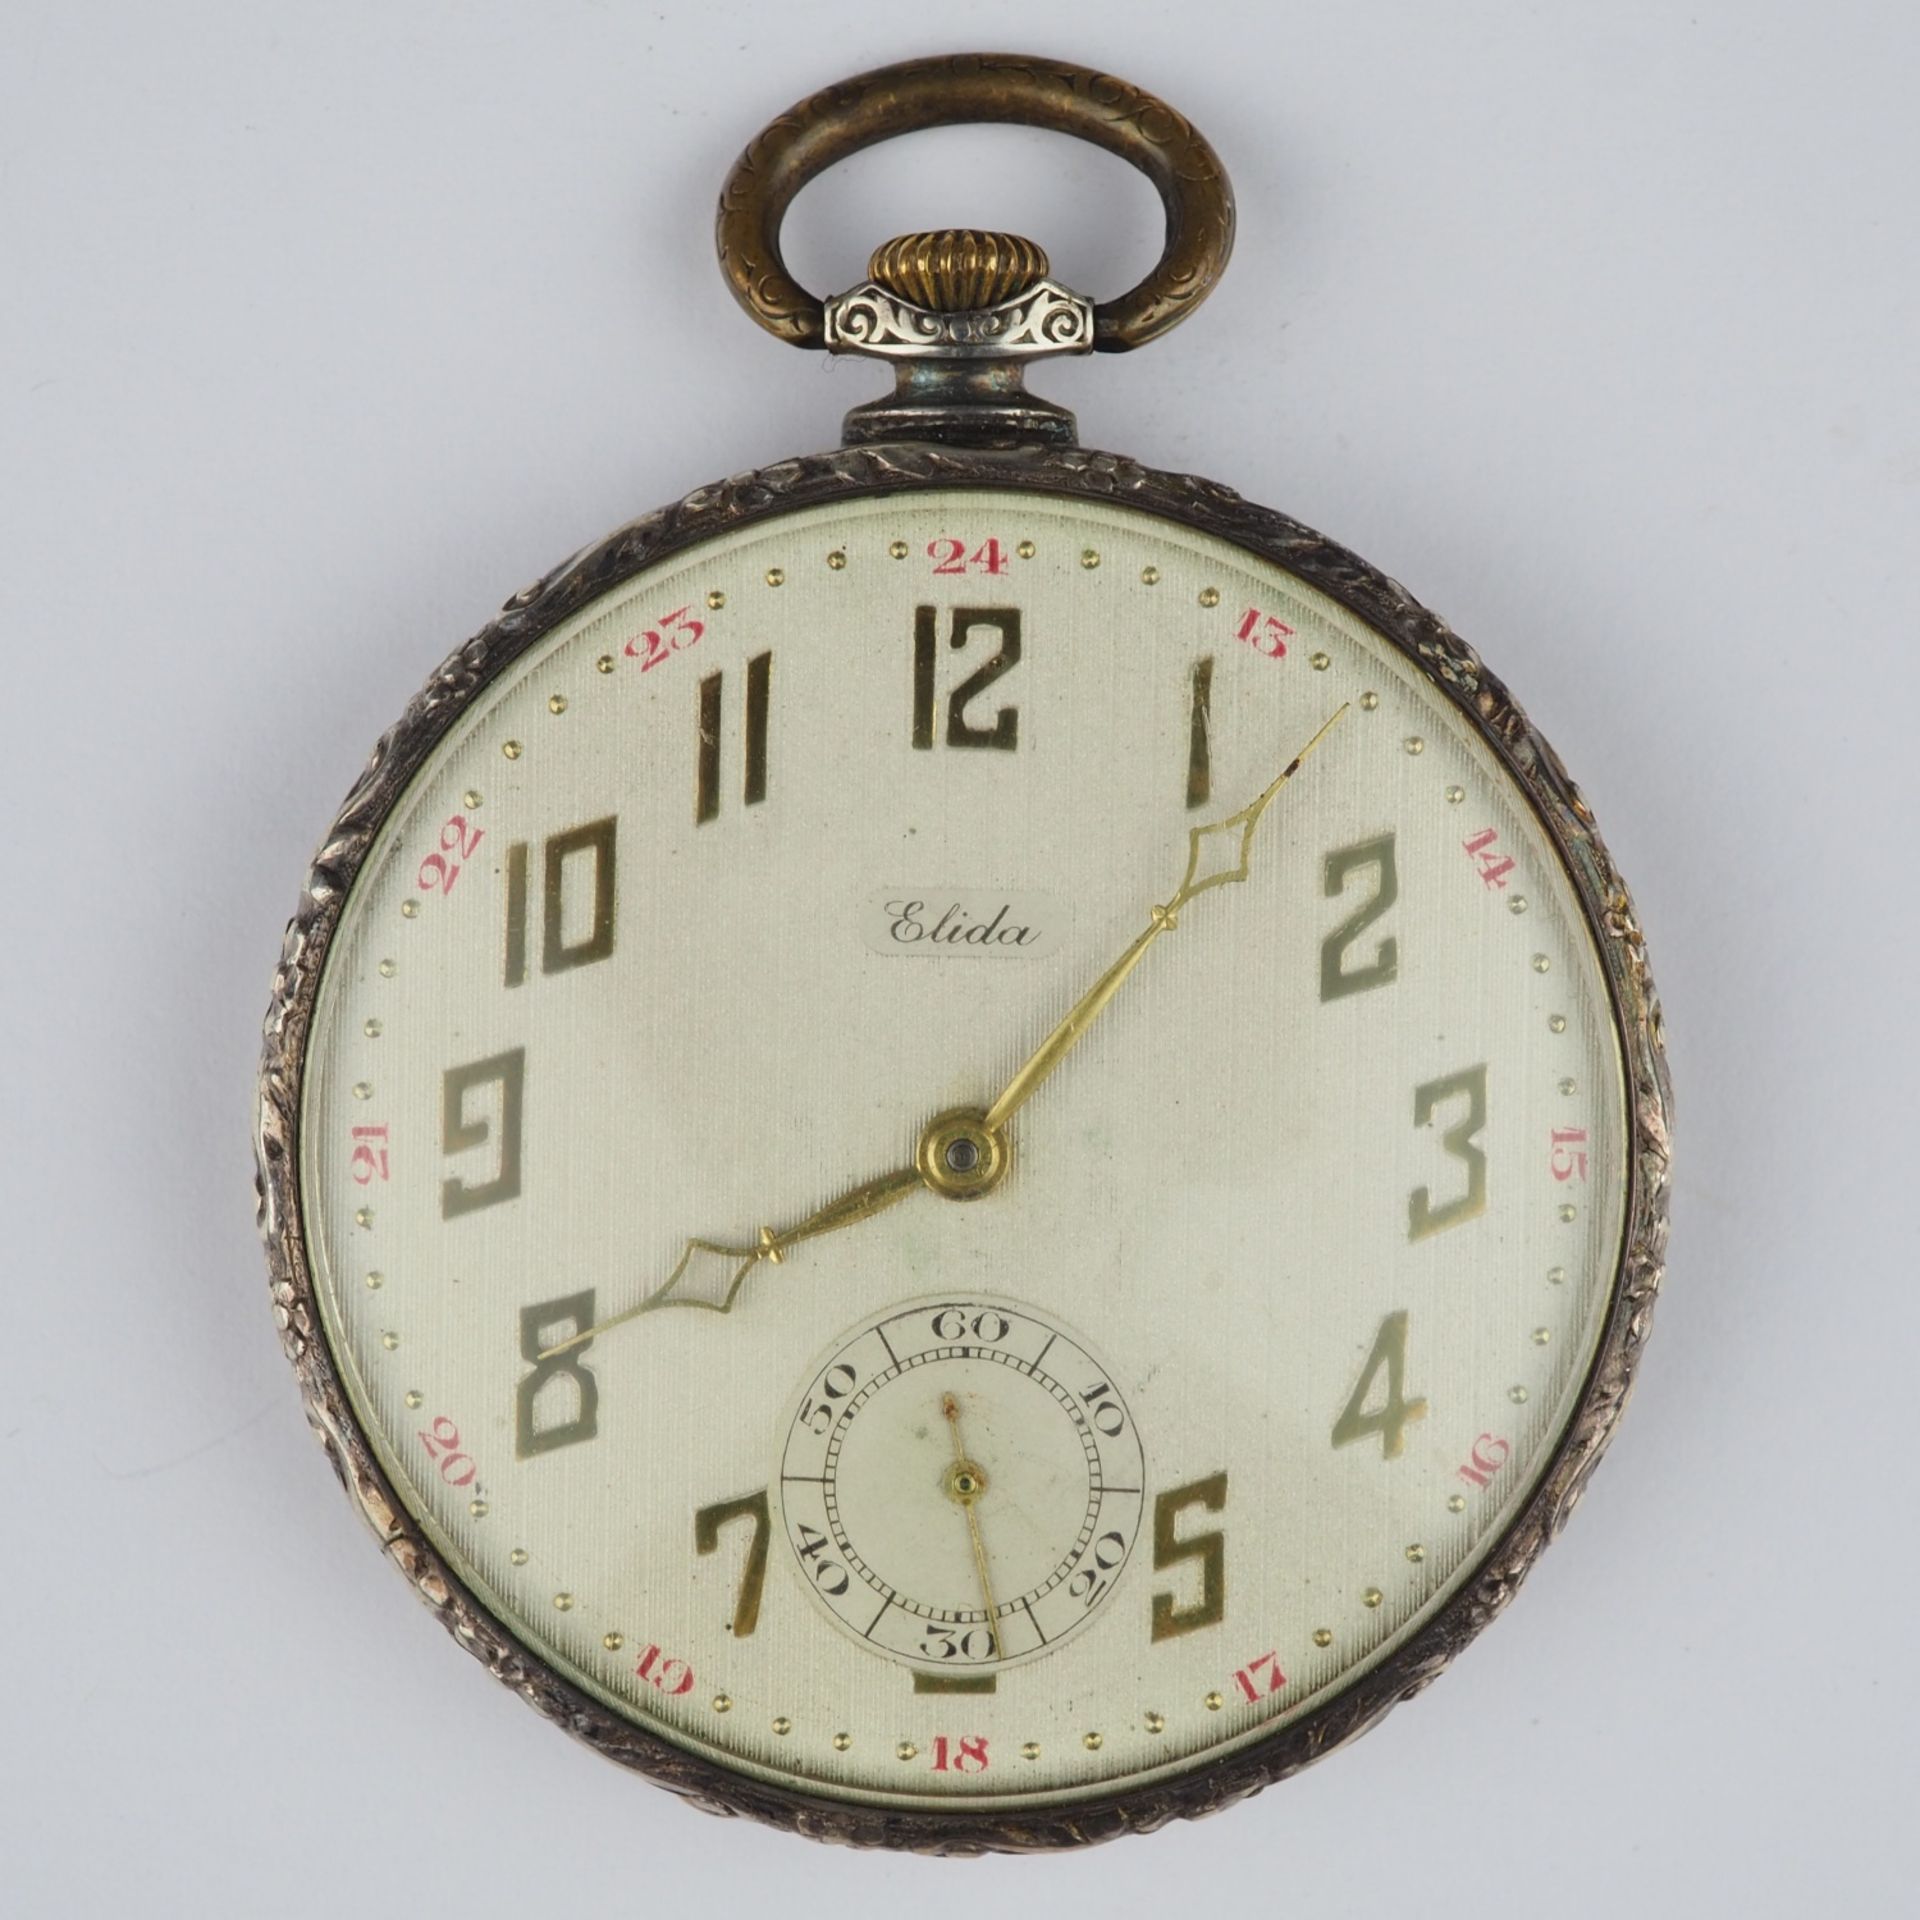 Swiss Lépine pocket watch by Elida, silver case, circa 1920.